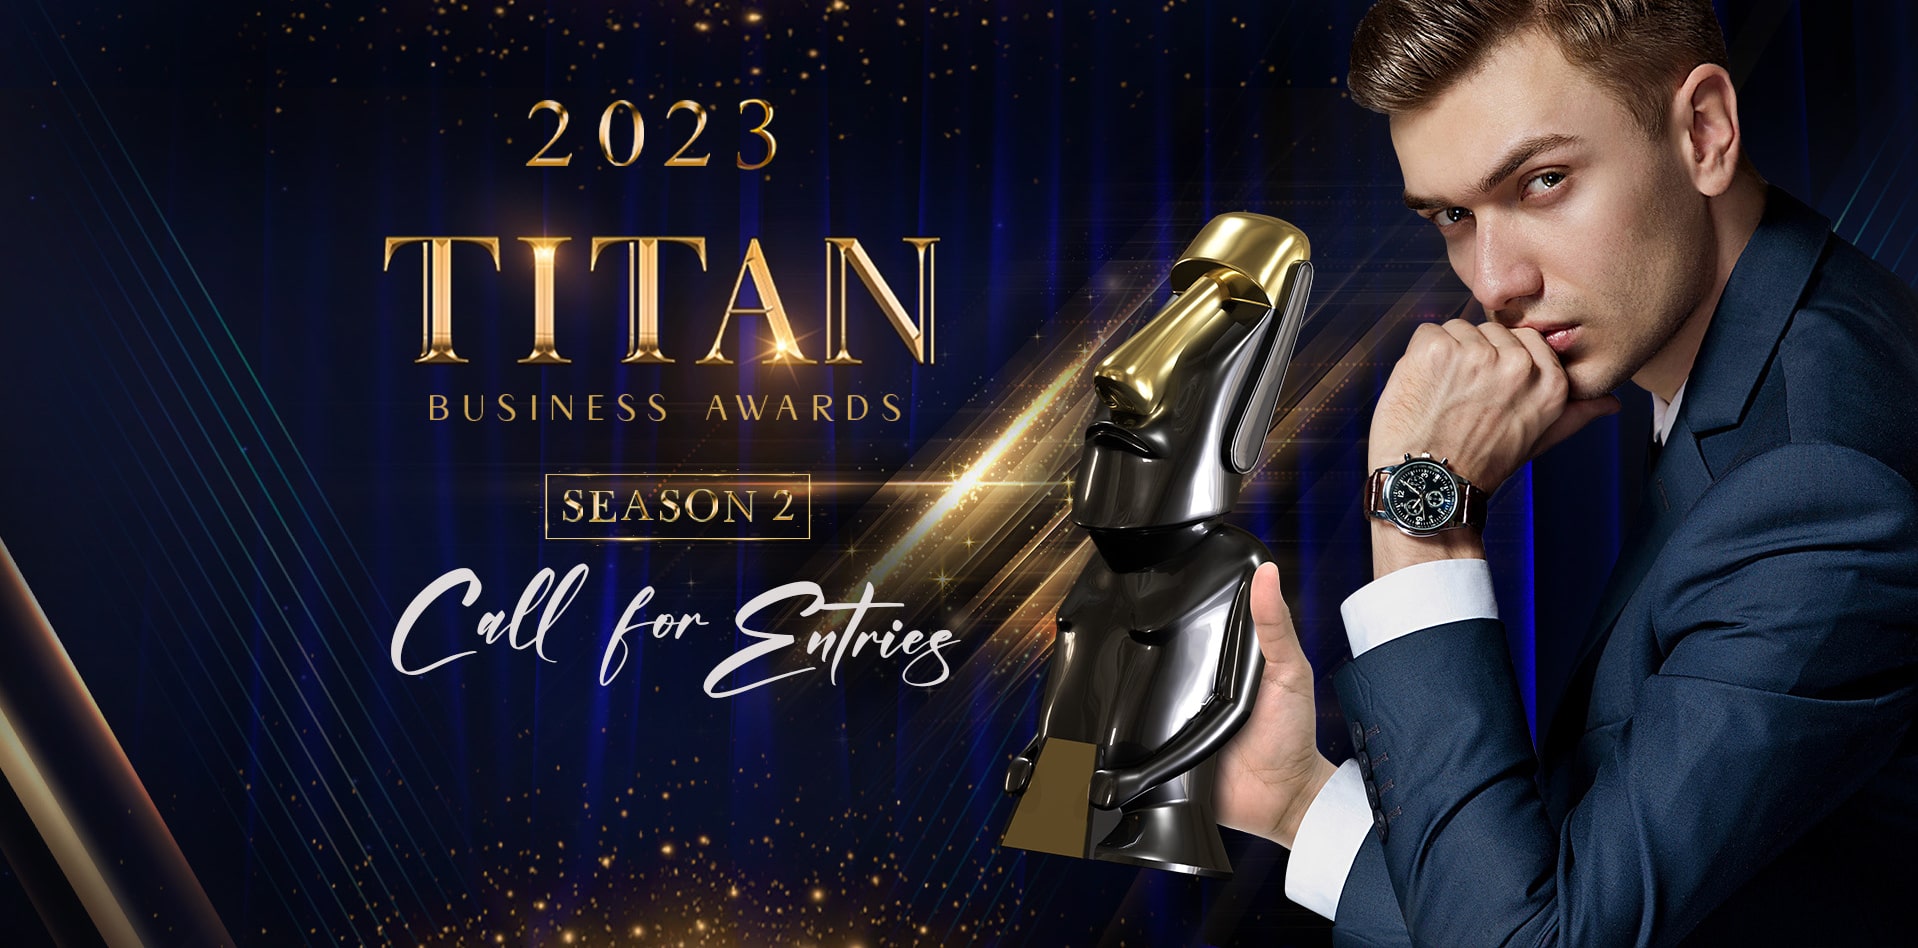 2023 TITAN Business Awards: Season 2 Call For Entries - International Business Awards